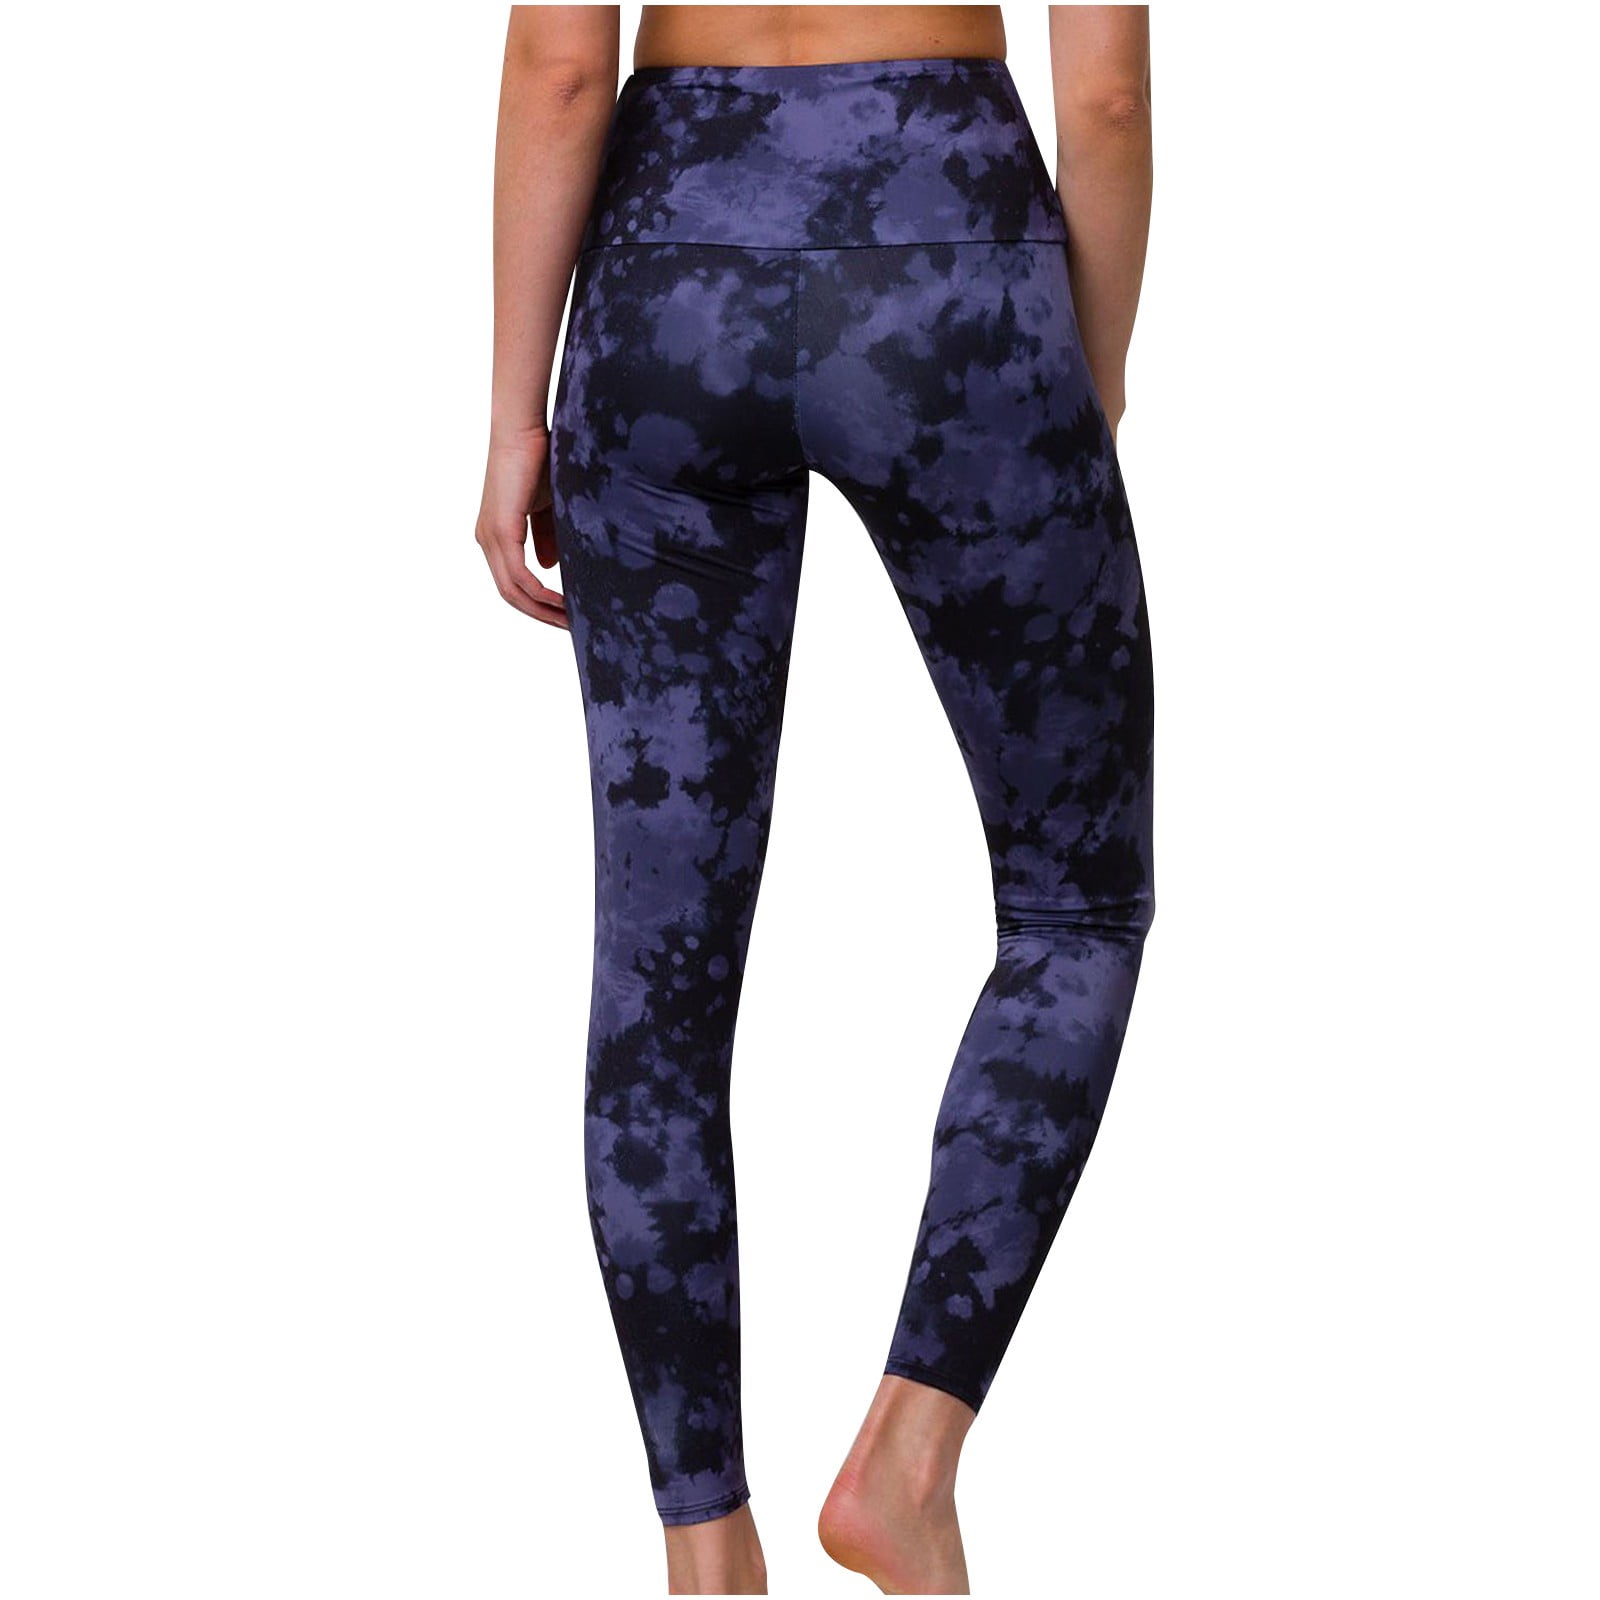 adviicd Yoga Pants For Girls Yoga Dress Pants Womenâ€™s High Waist Booty  Yoga pants Gym Workout Spandex Dance Hot Pants Lifting Rave Bottoms Sky  Blue